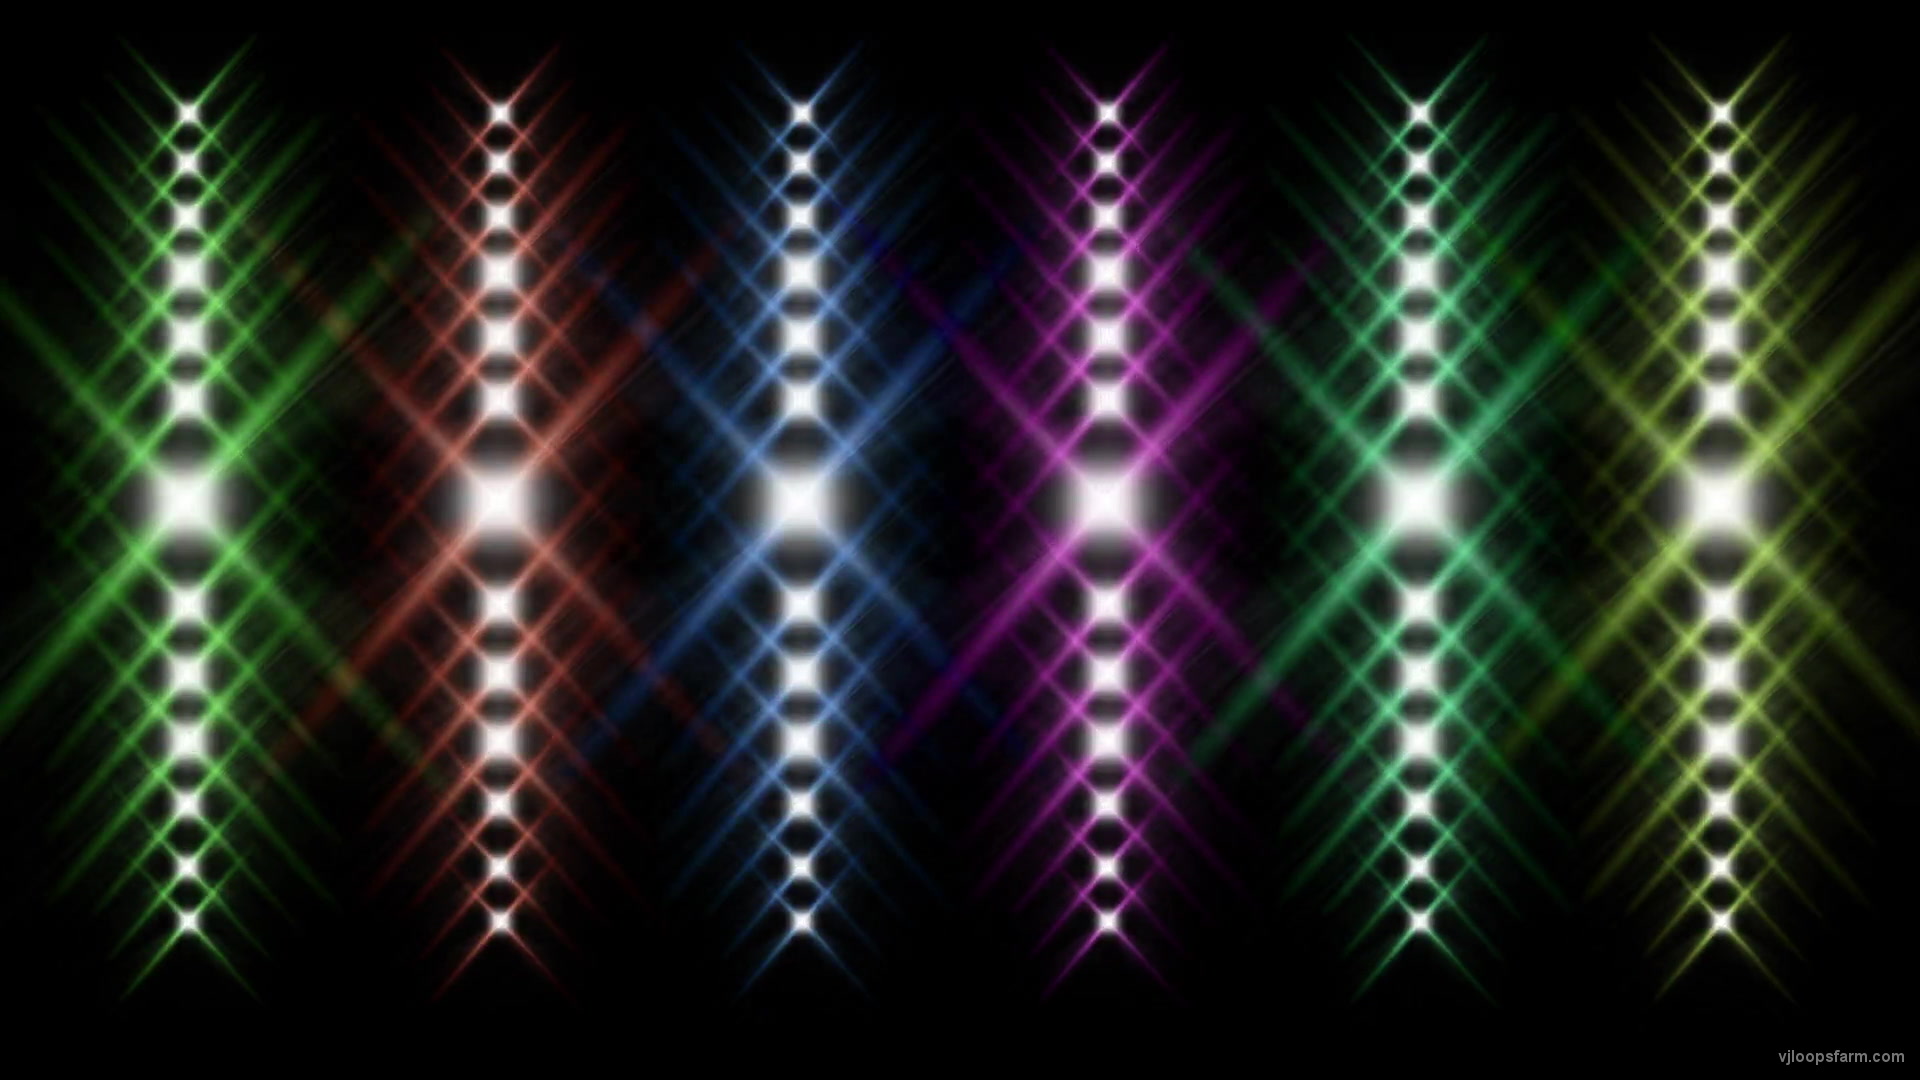 Shine Lights columns PSY Colors pattern blinking Ultra HD VJ Loop